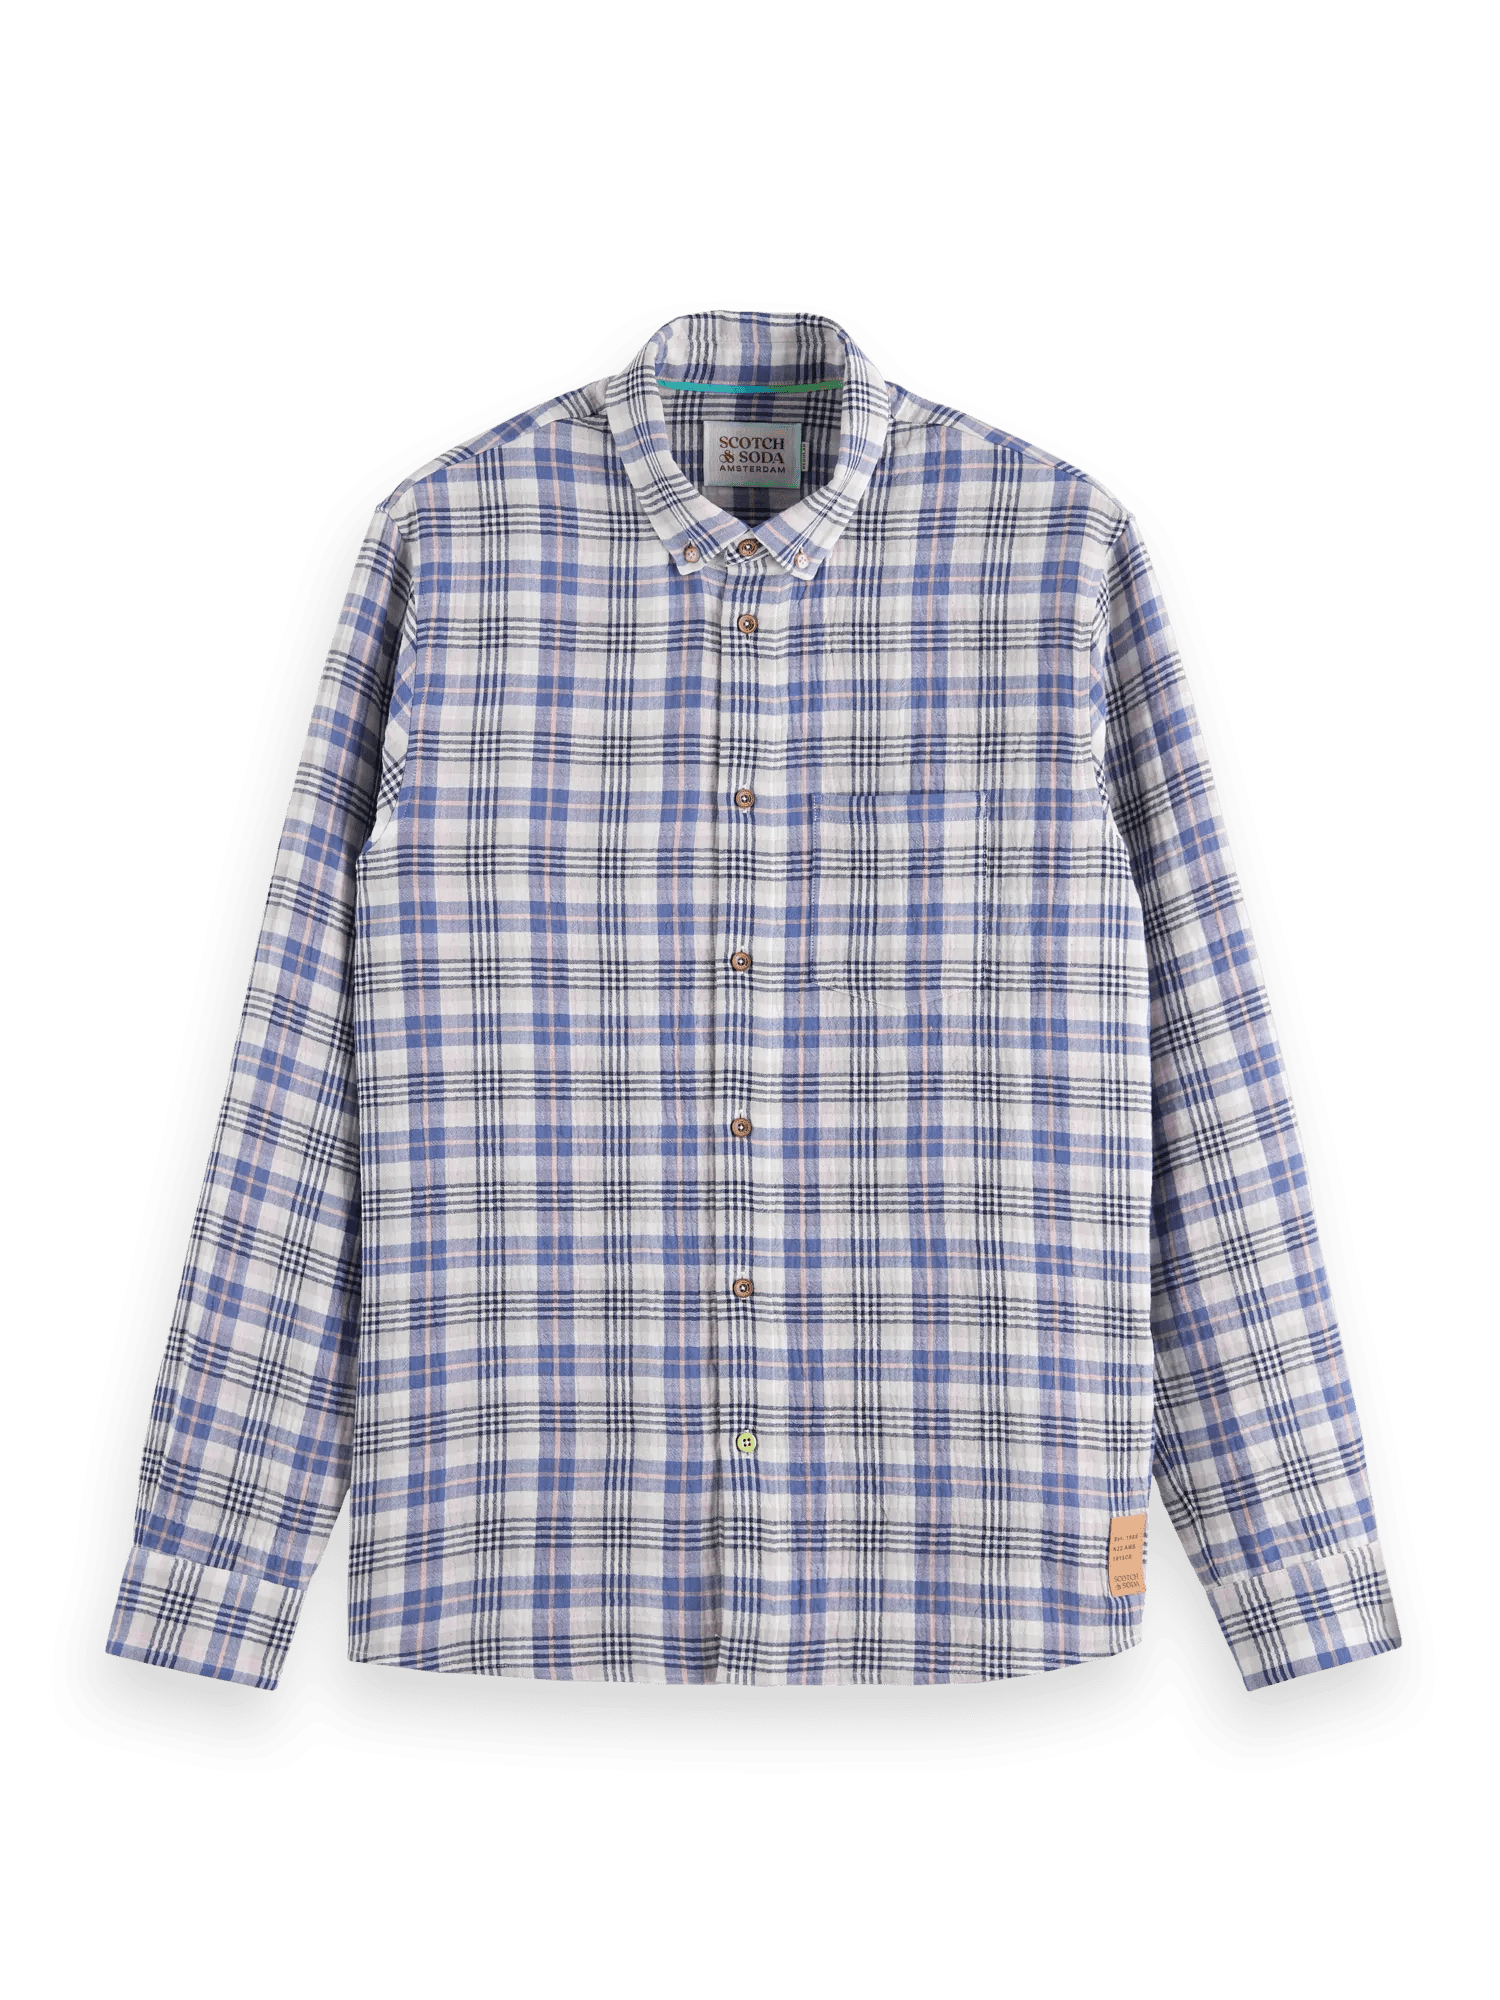 Scotch & Soda Bonded long sleeve shirt in prints and checks FNT